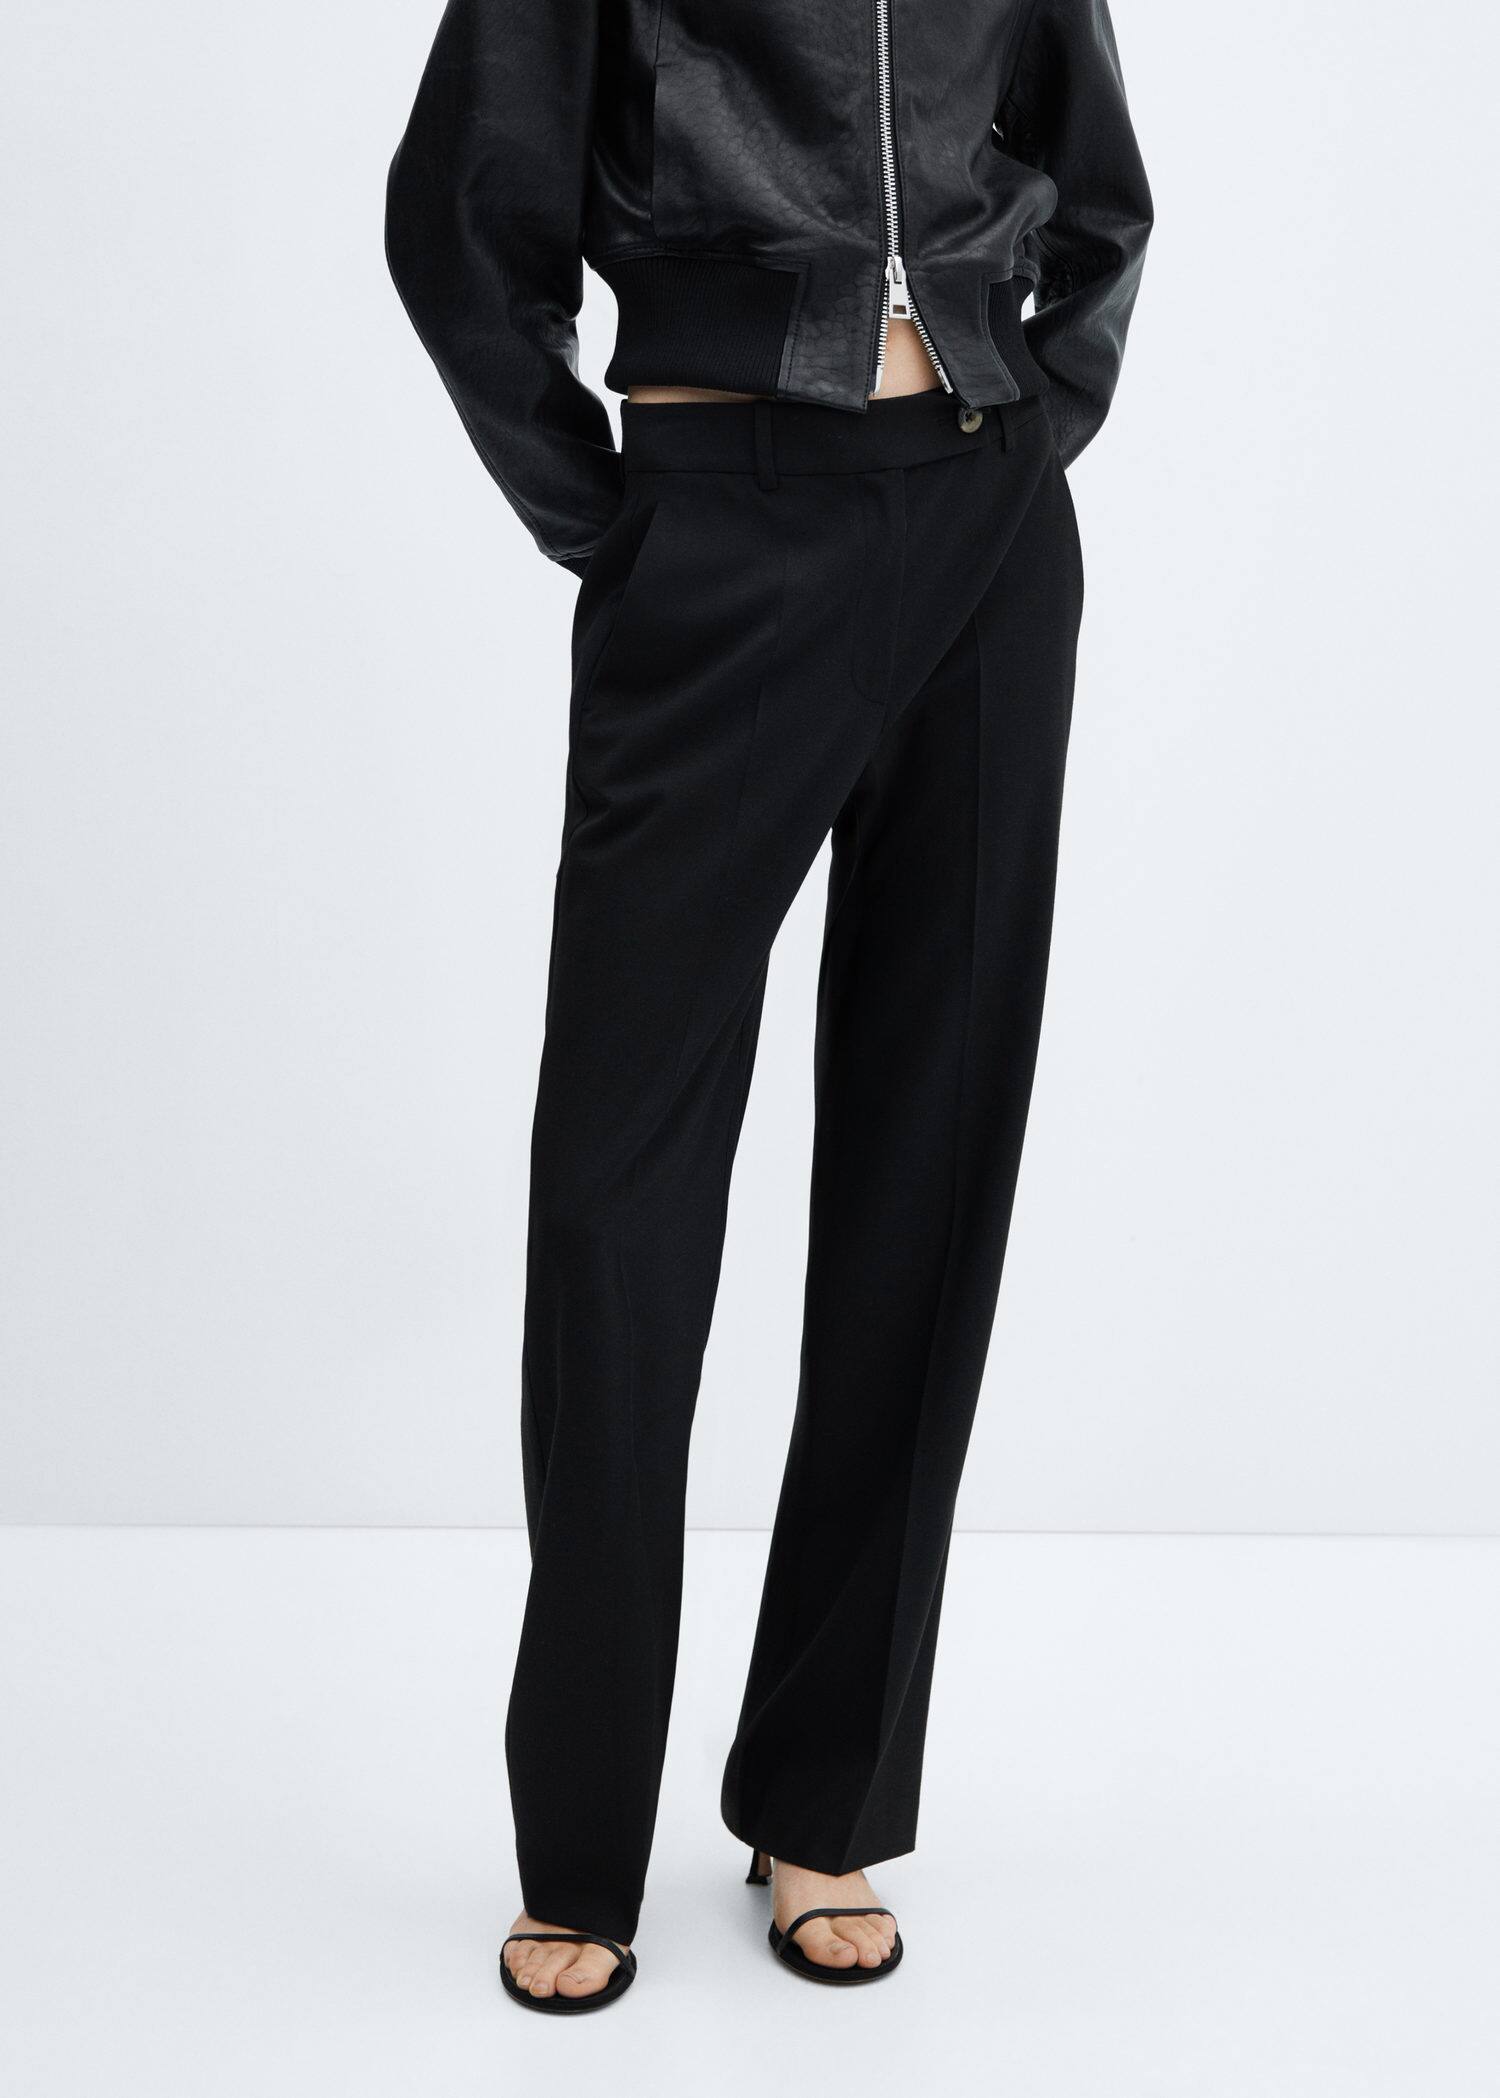 Buy Hubberholme Women's Cotton Blend Regular Fit Side Button Stripe Track  Pants (Black, 26) at Amazon.in